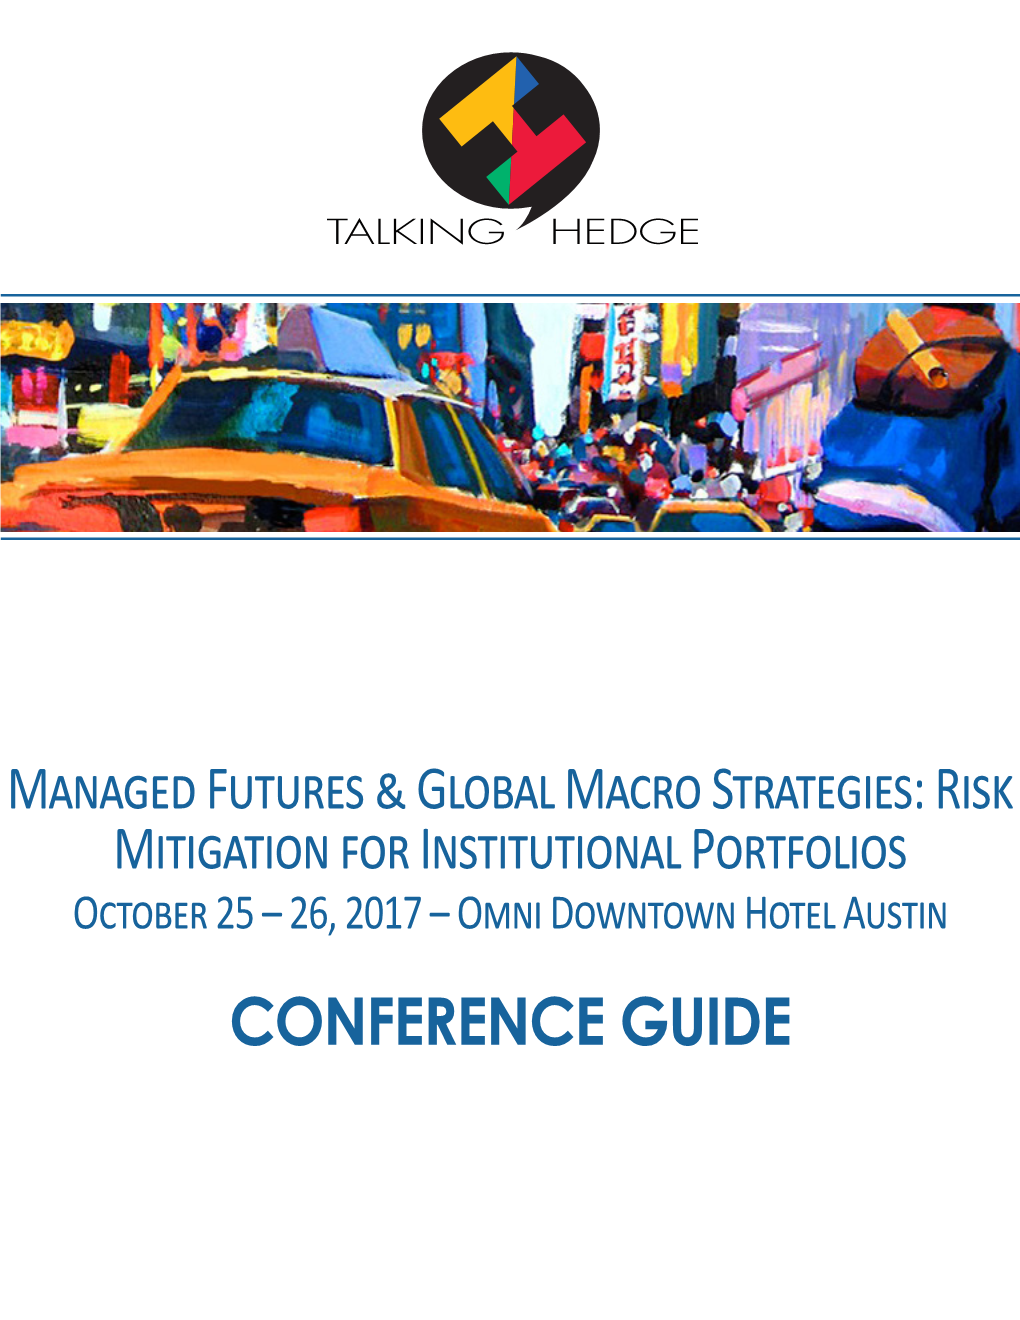 Managed Futures & Global Macro Strategies: Risk Mitigation for Institutional Portfolios